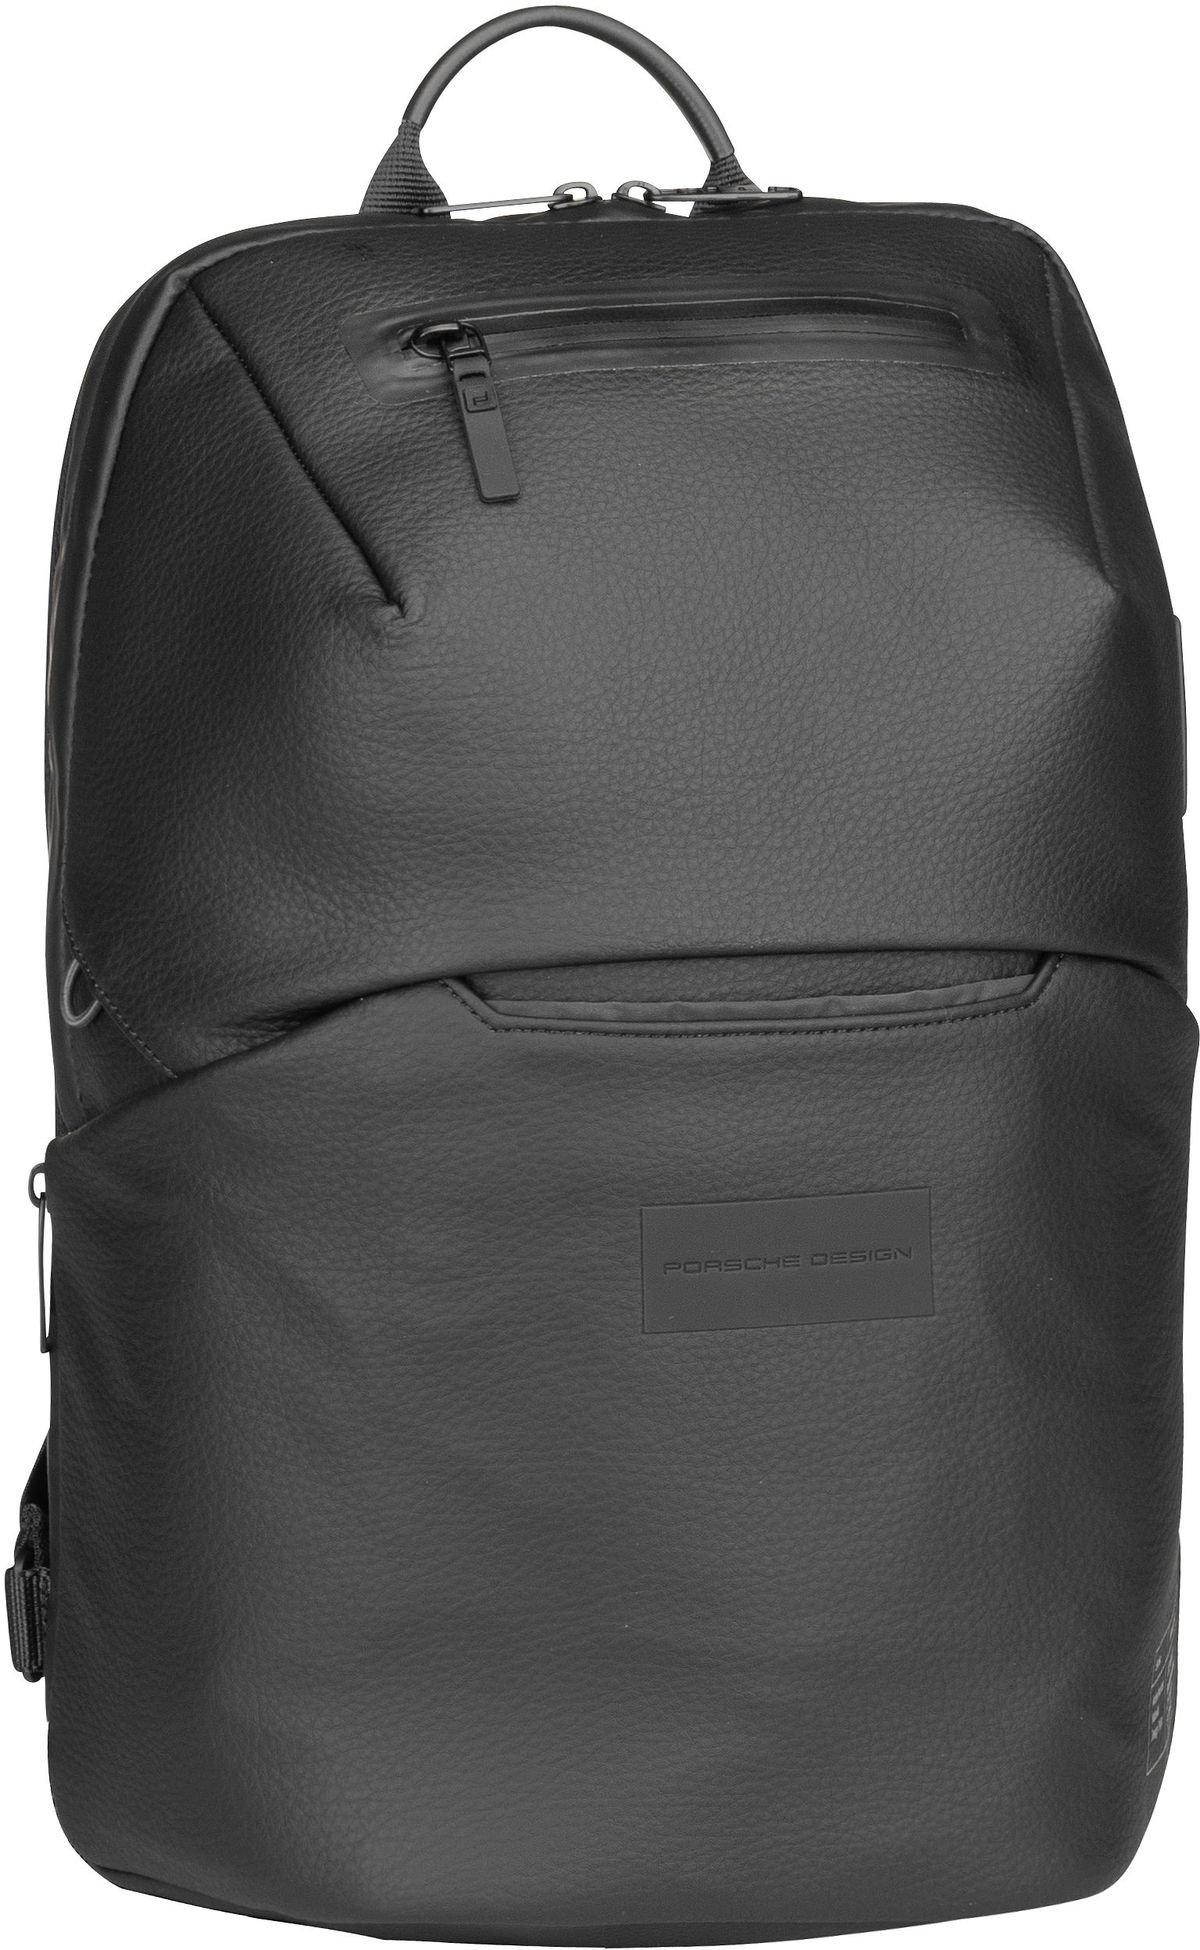 Porsche Design Urban Eco Leather Backpack XS  in Black (15.1 Liter), Rucksack / Backpack